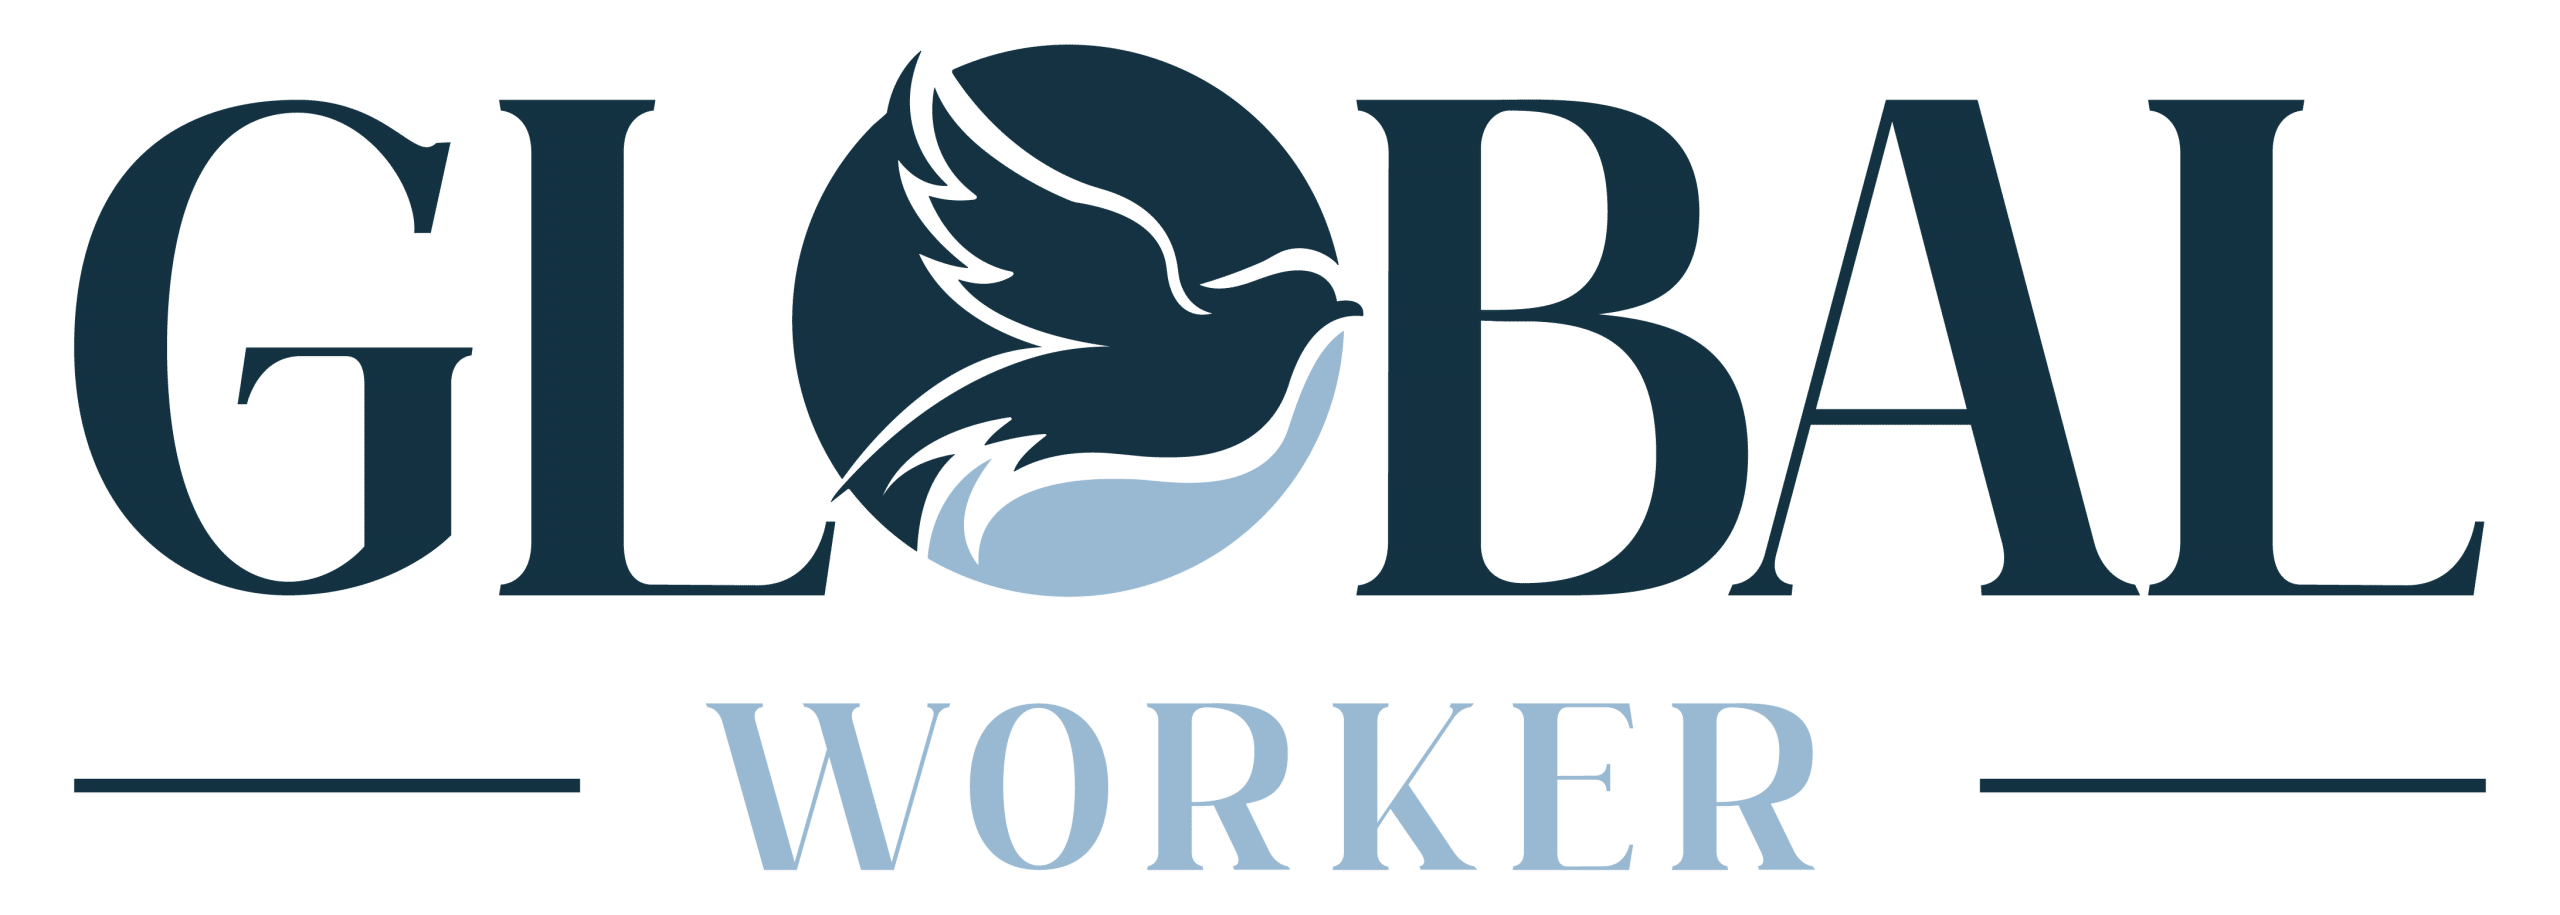 global worker image